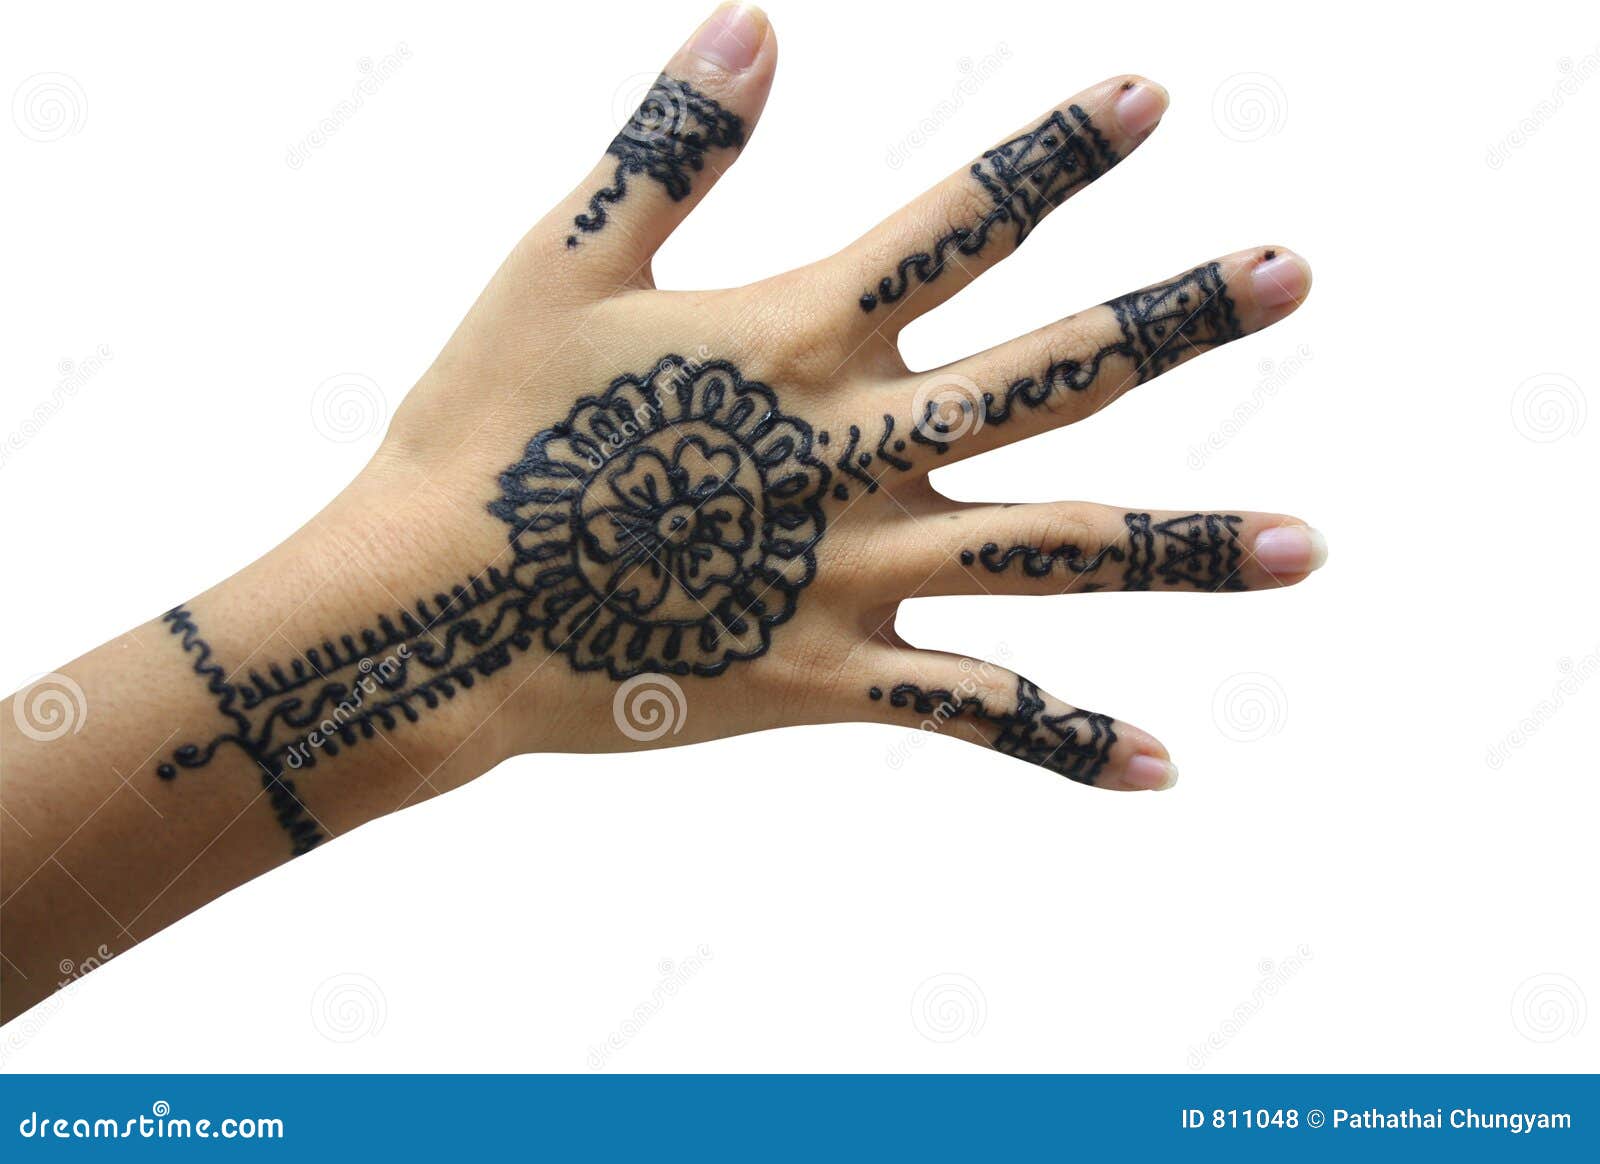 Top 53 Africa Tattoo Ideas 2021 Inspiration Guide  African tattoo Africa  tattoos African tribal tattoos